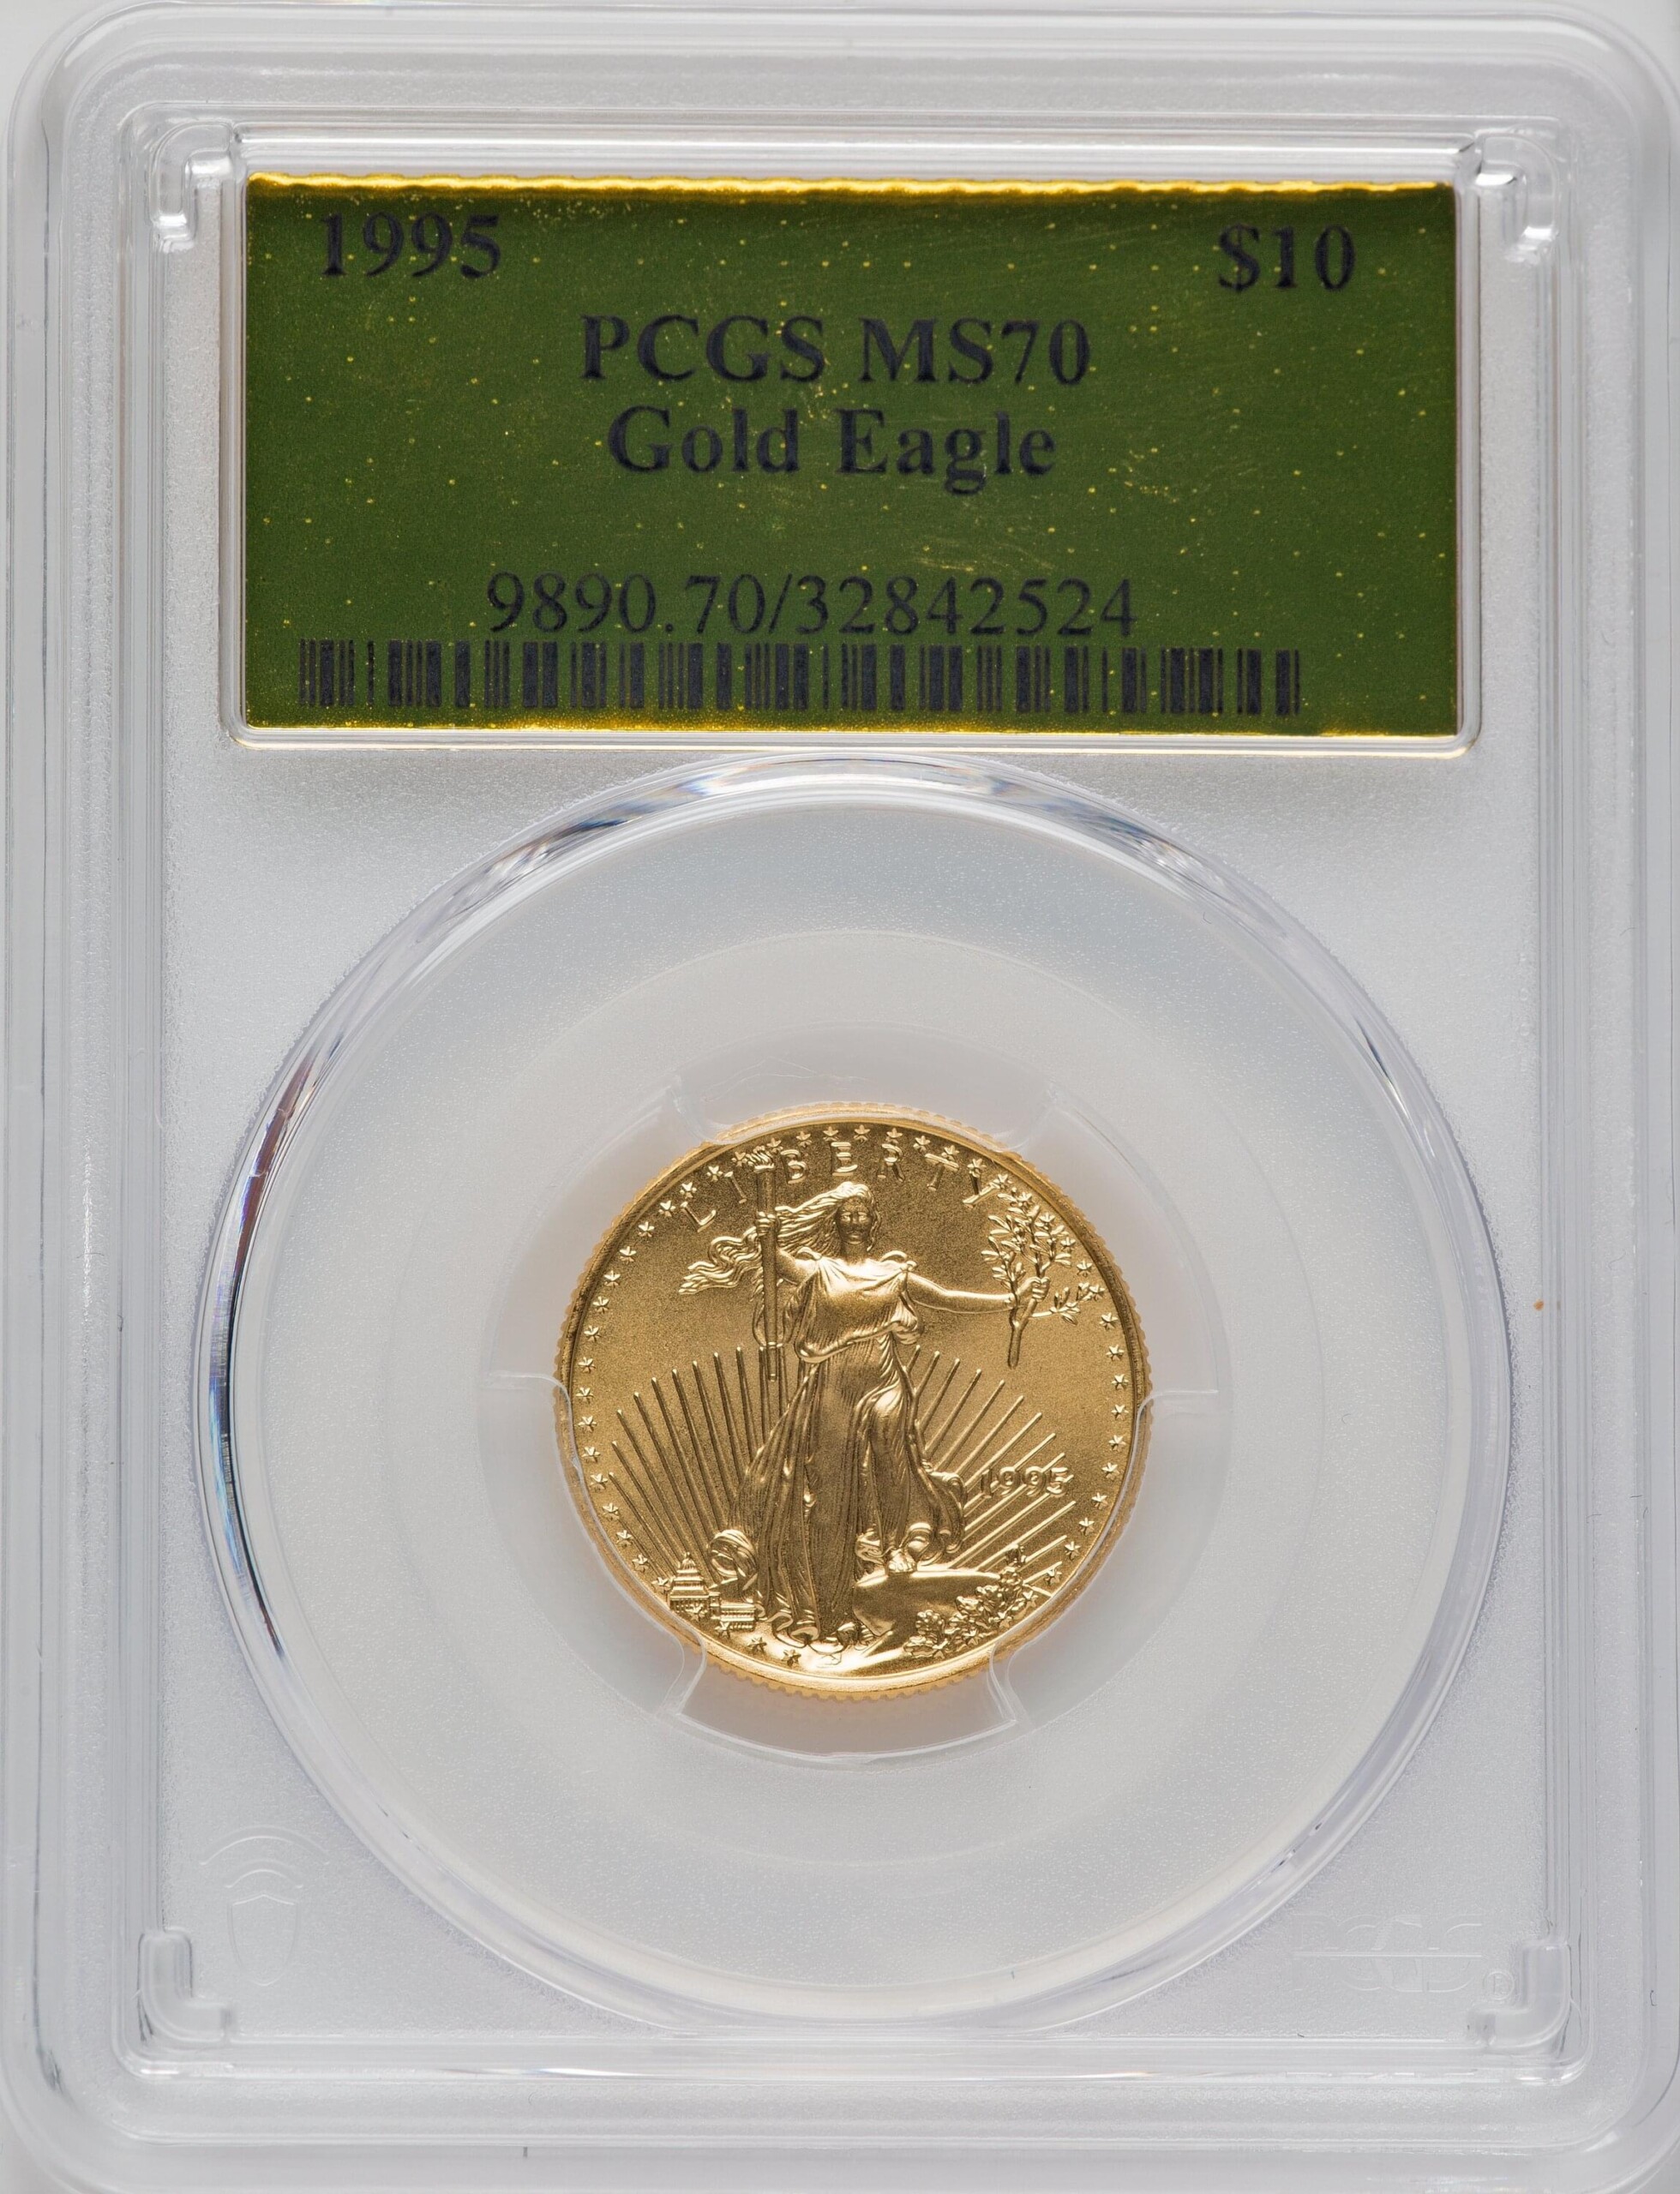 1995 $10 Quarter-Ounce Gold Eagle, MS 70 PCGS